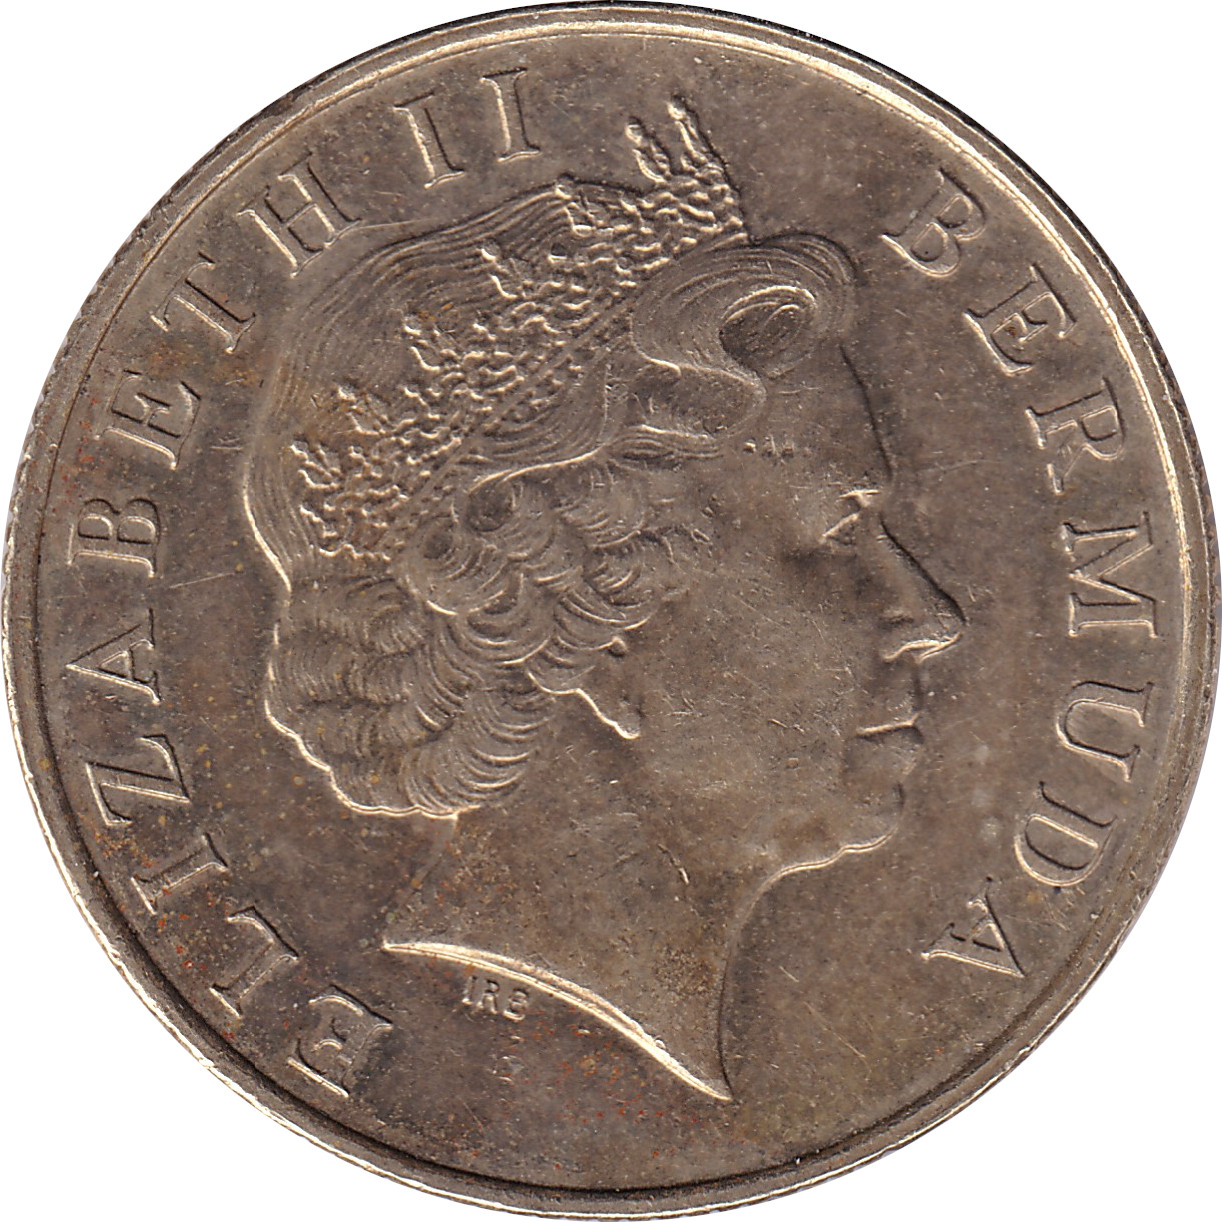 1 dollar - Elizabeth II - Old head